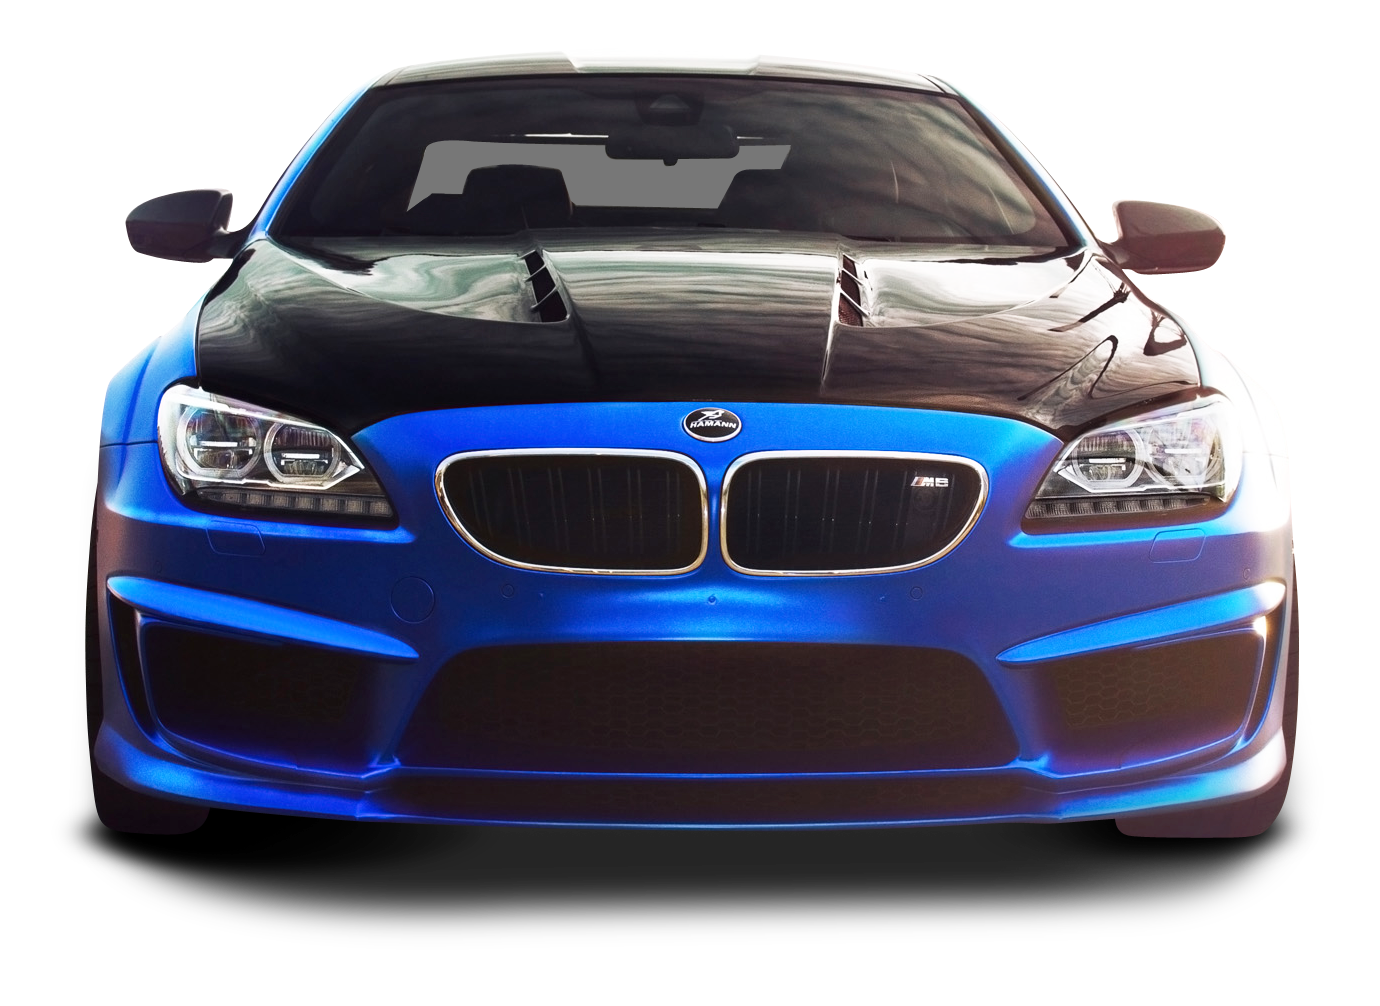 BMW M6 Blue Car PNG Image.